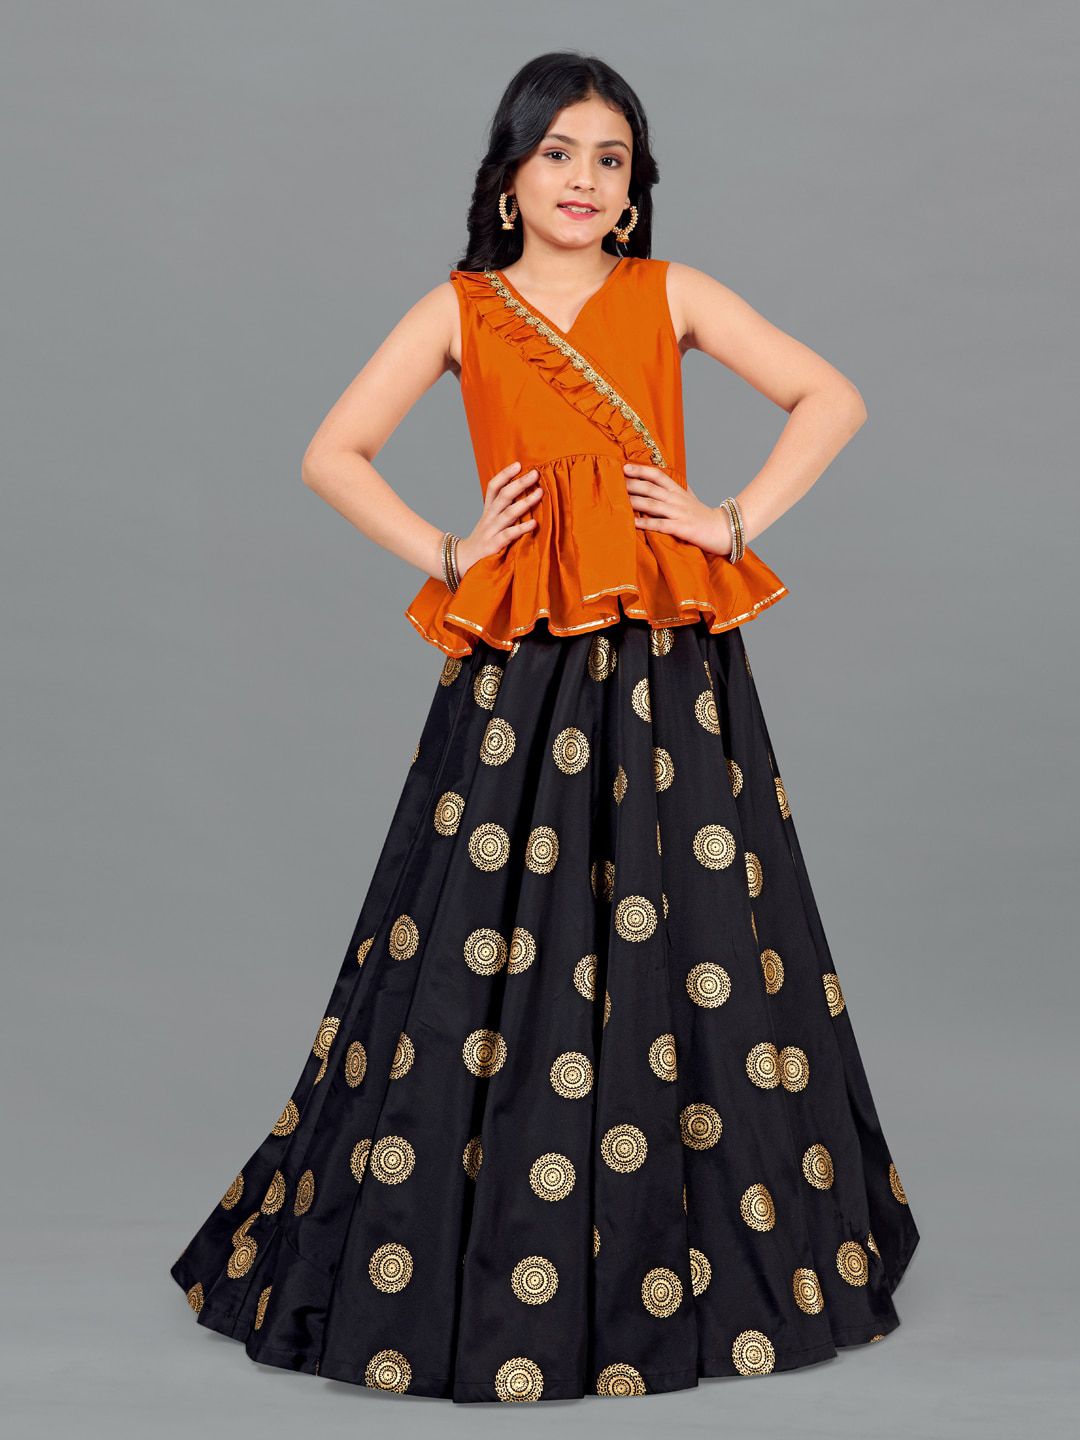 FASHION DREAM Girls Orange & Black Embellished Printed Ready to Wear Lehenga Choli Set Price in India